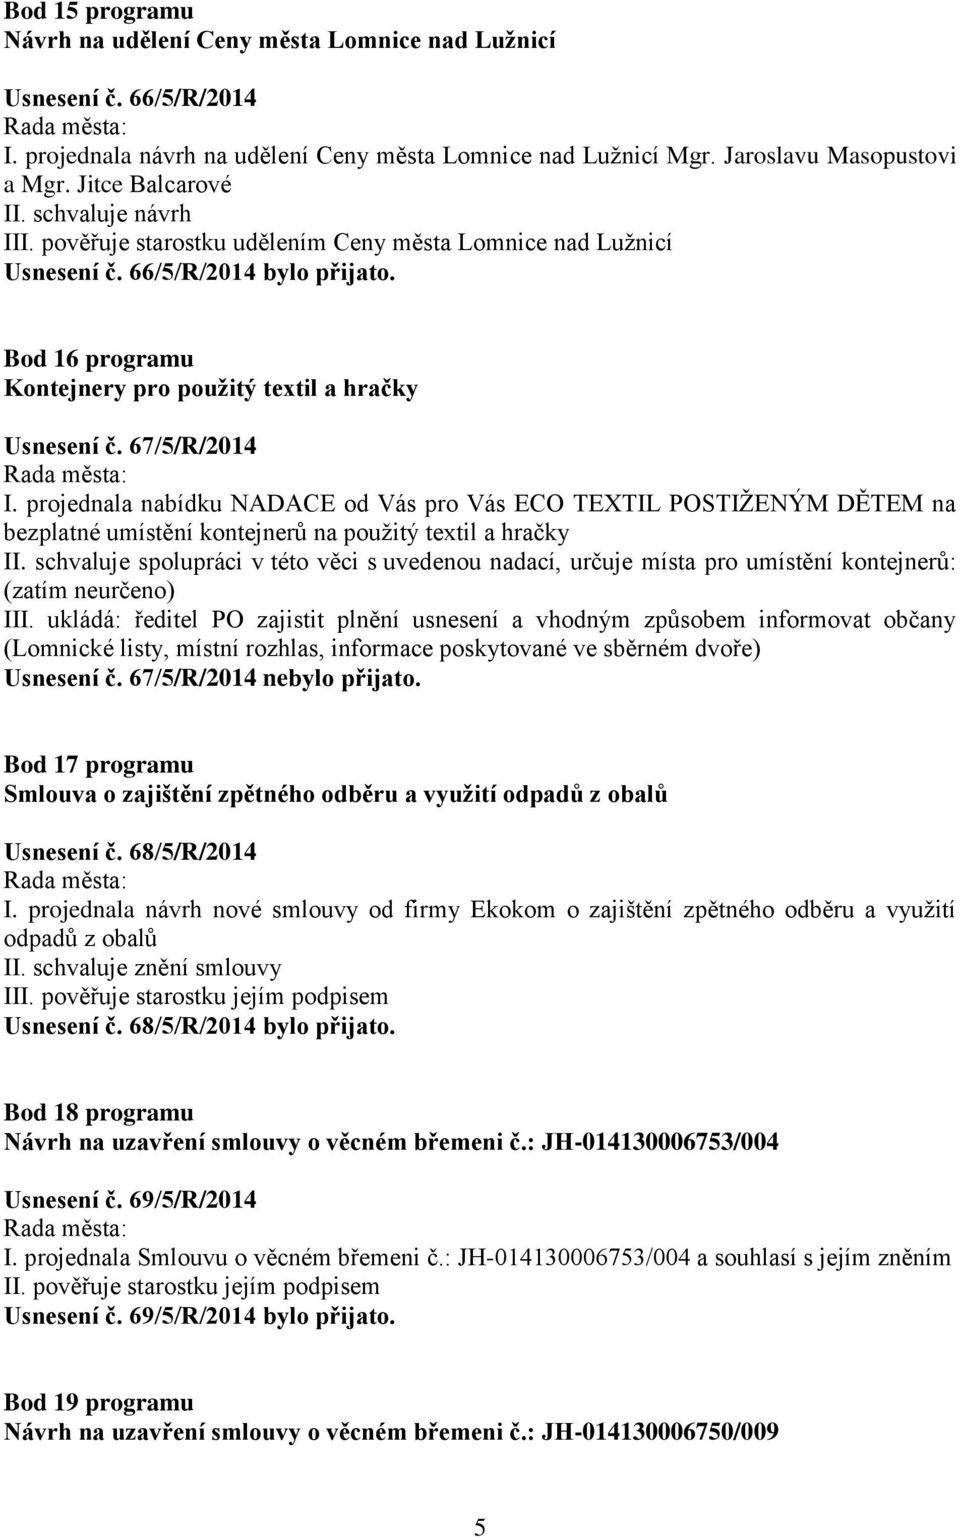 Bod 16 programu Kontejnery pro použitý textil a hračky Usnesení č. 67/5/R/2014 I.